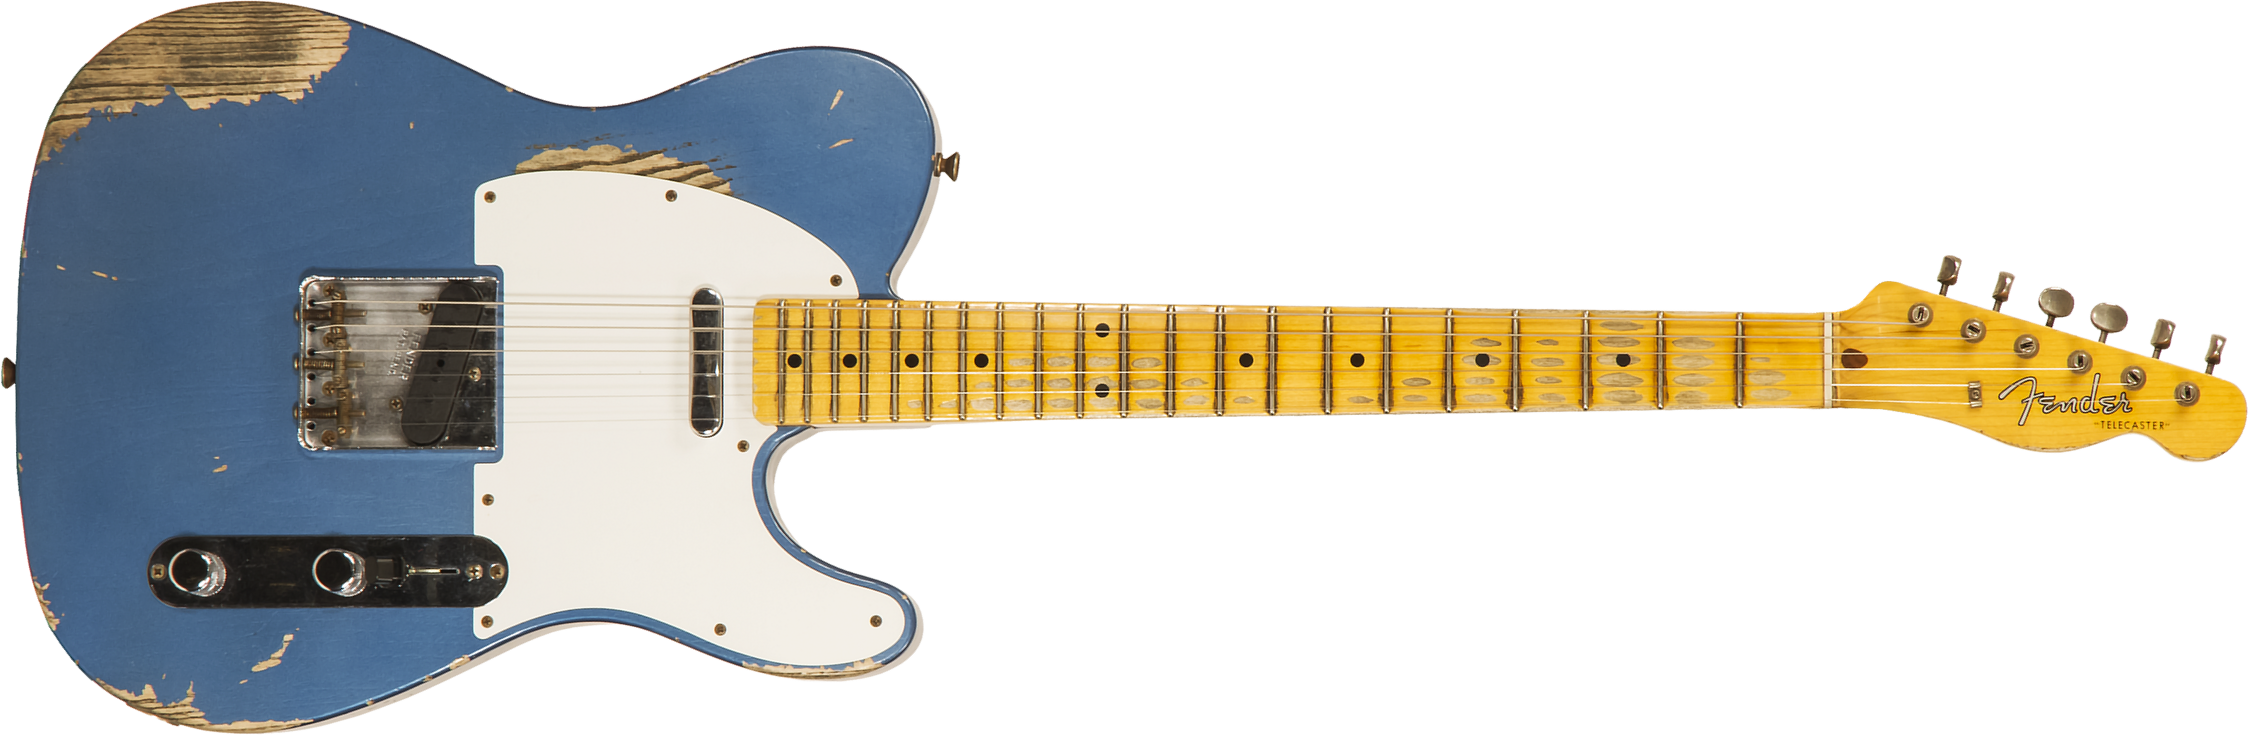 Fender Custom Shop Tele 1958 2s Ht Mn #cz550155 - Heavy Relic Lake Placid Blue - Televorm elektrische gitaar - Main picture